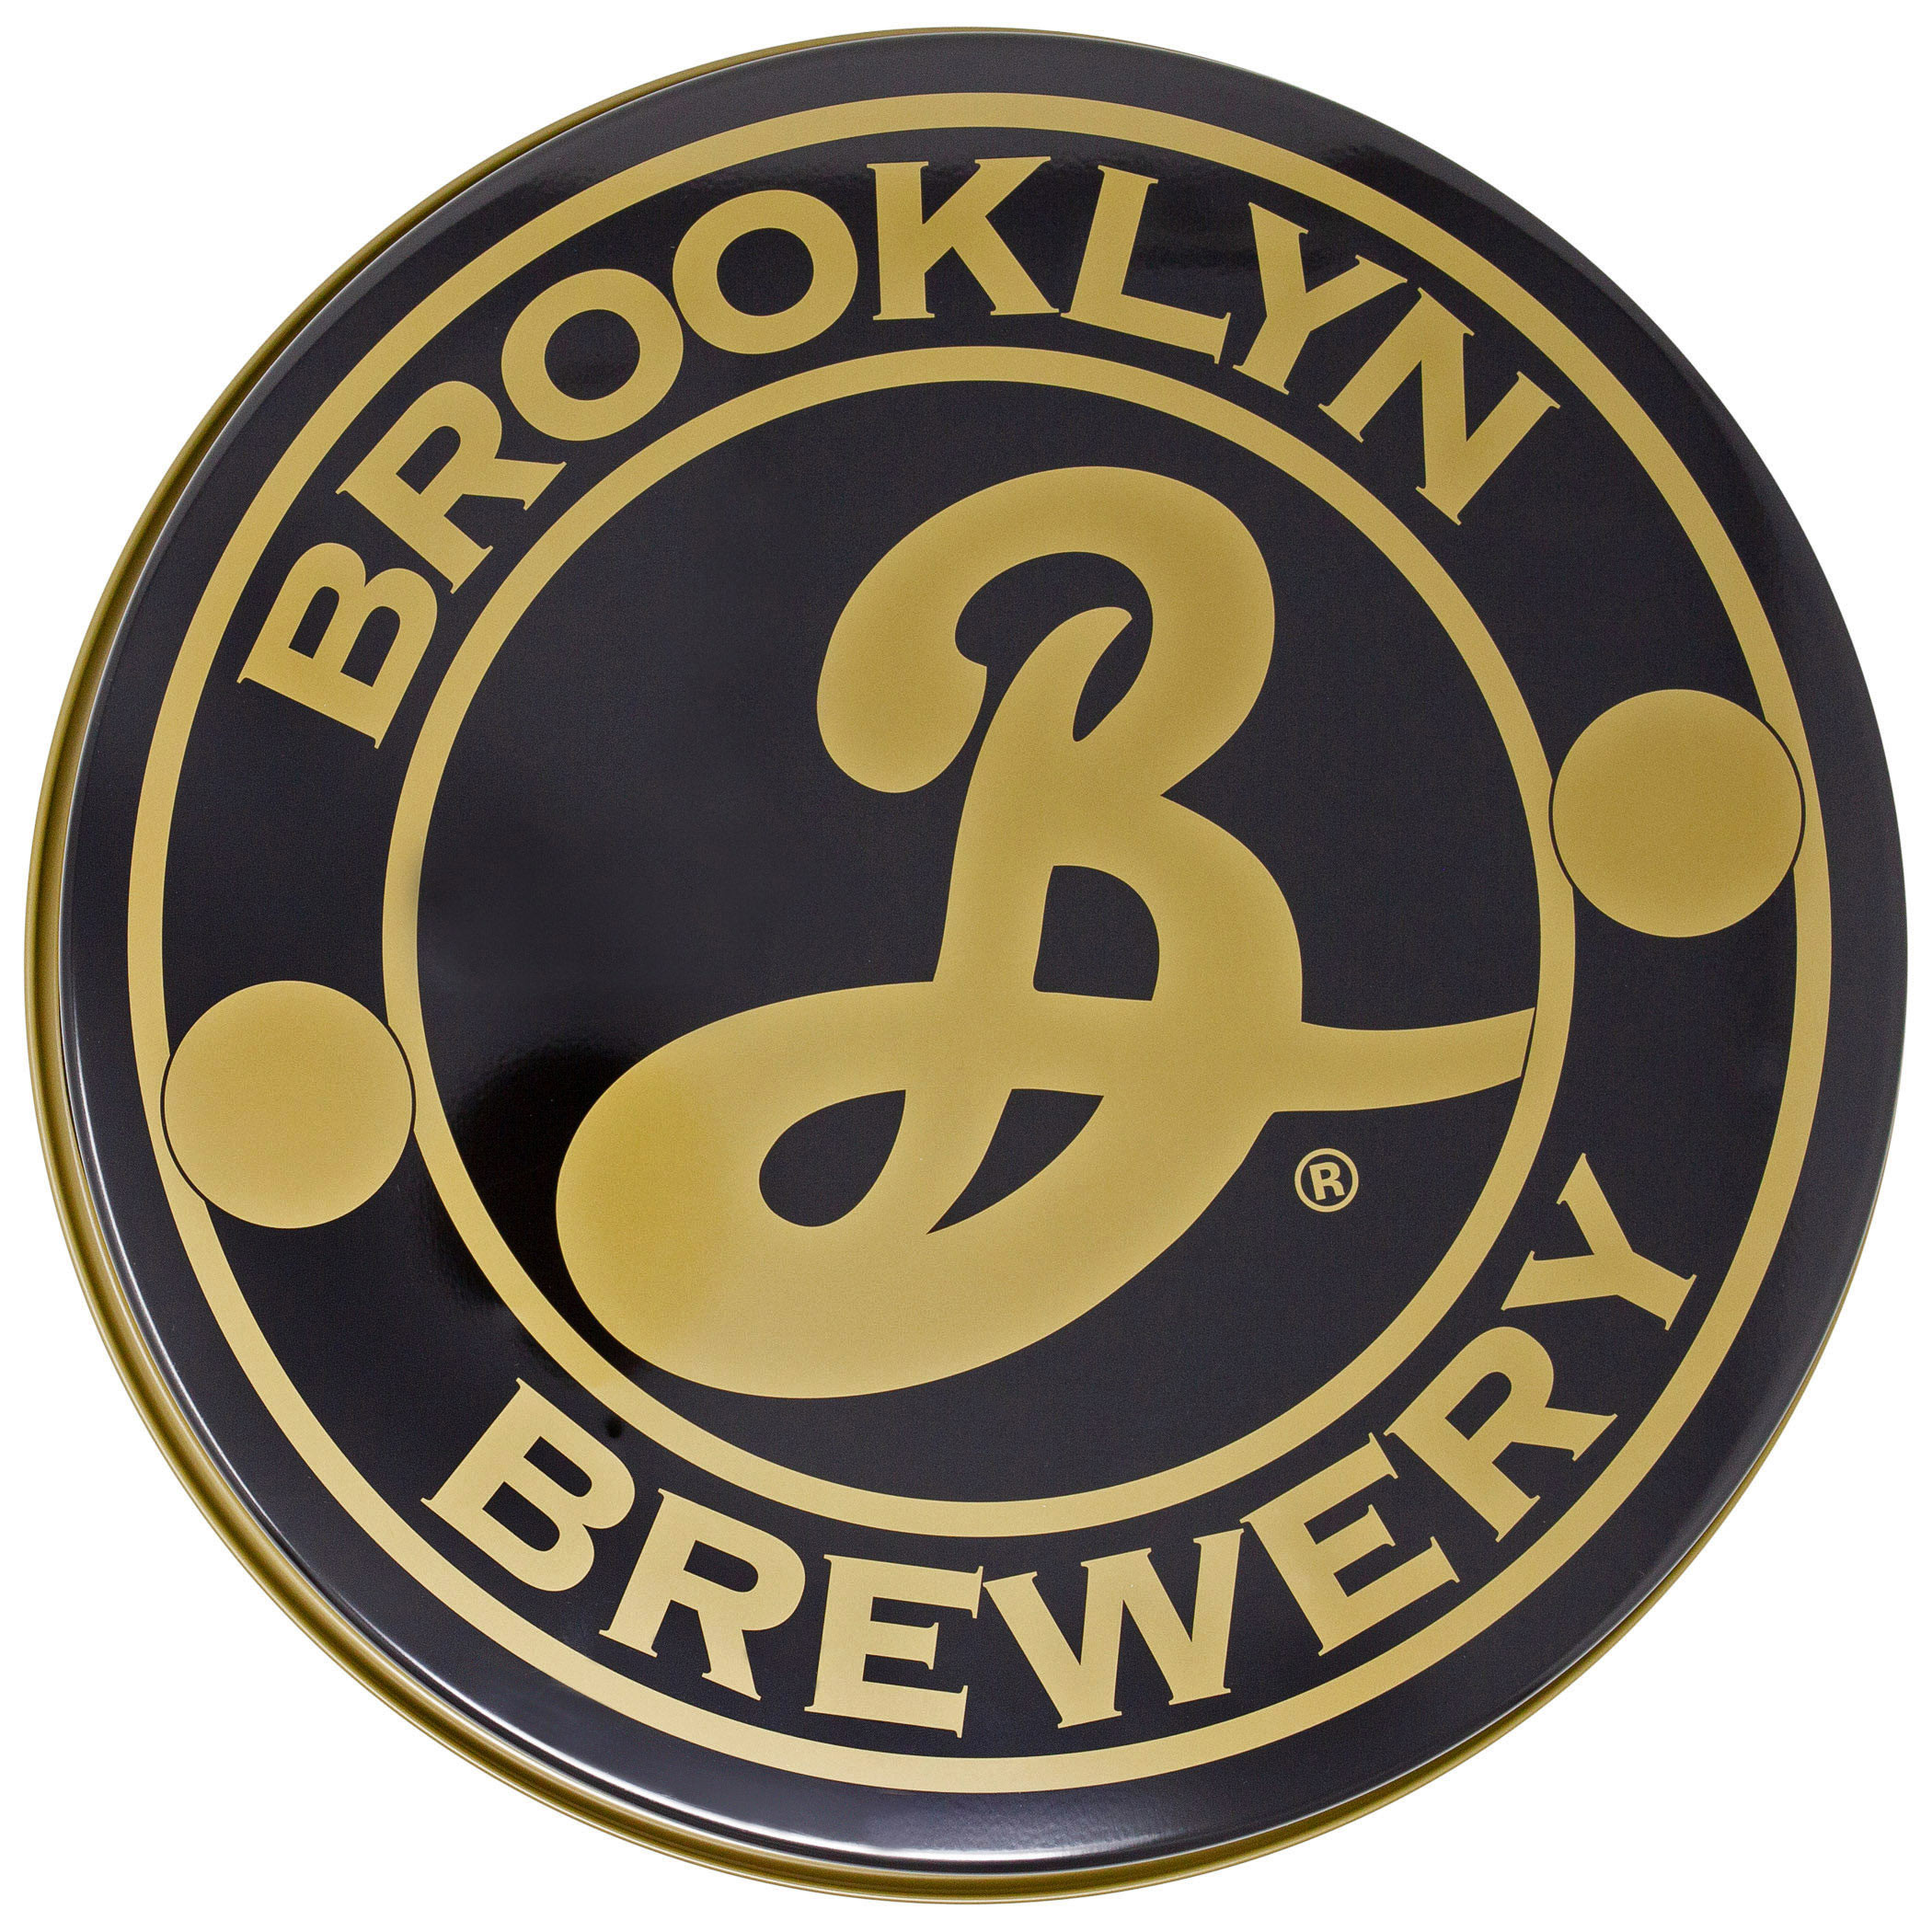 Brooklyn Brewery Serving Tray